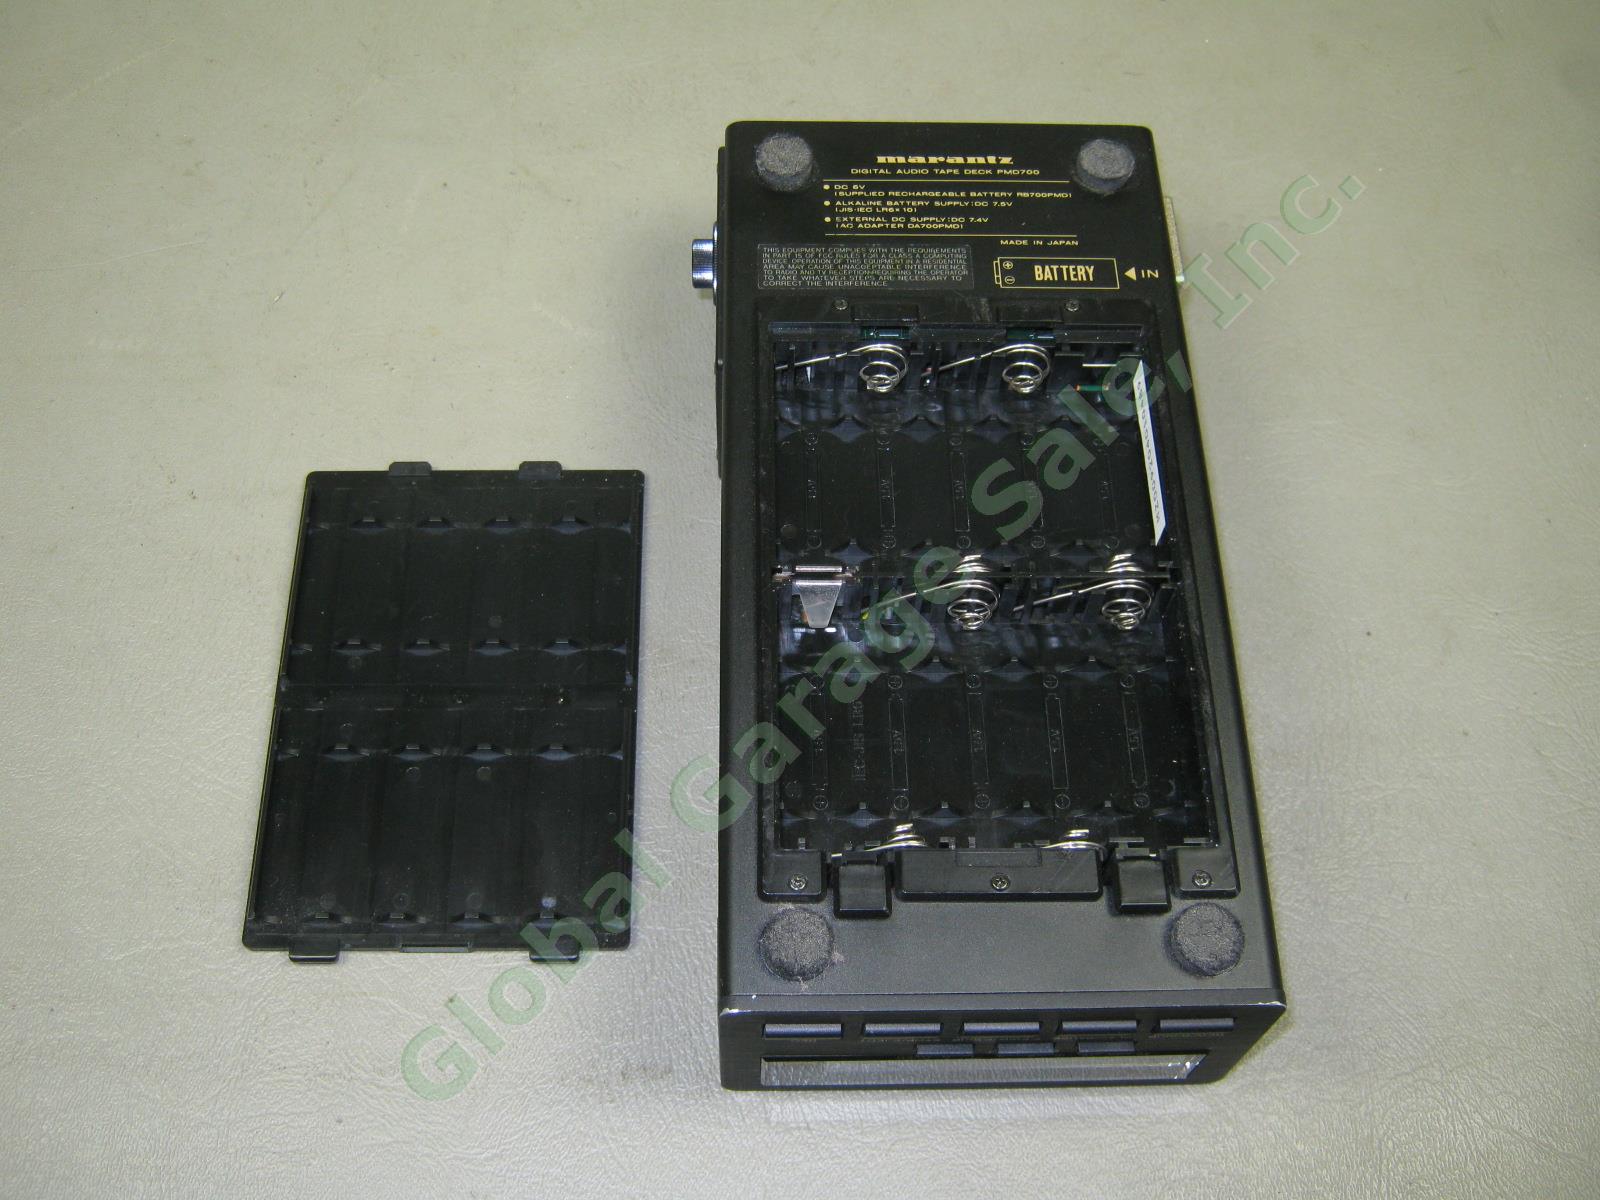 Marantz PMD700 Professional DAT Digital Audio Tape Deck Recorder +AC Adapter Lot 8